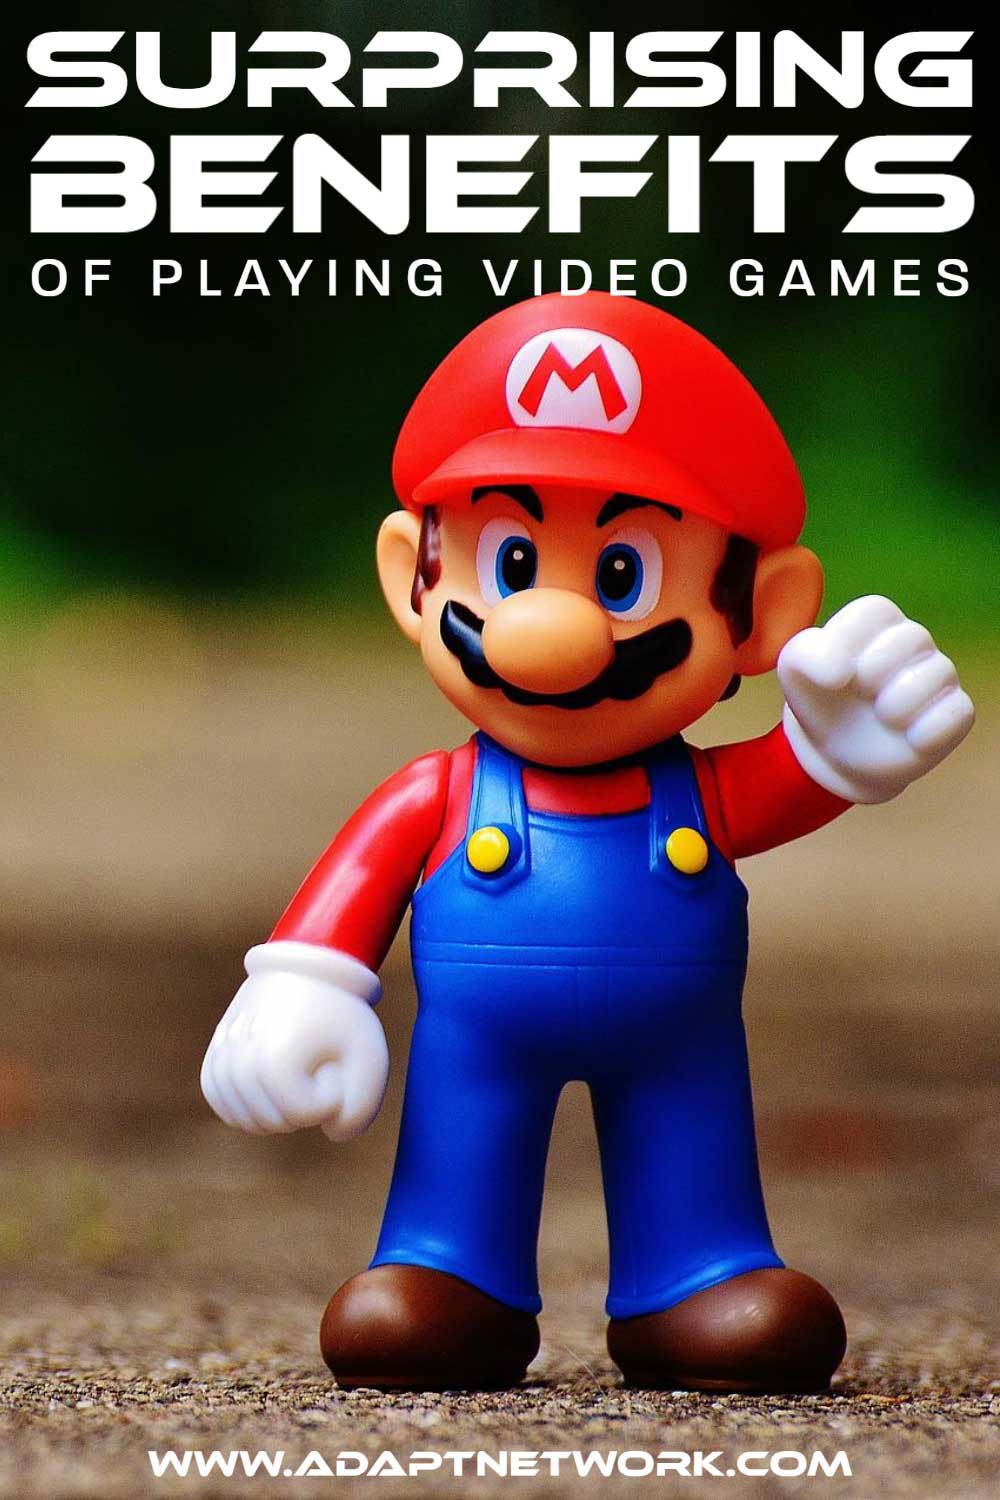 15 Surprising Benefits of Playing Video Games